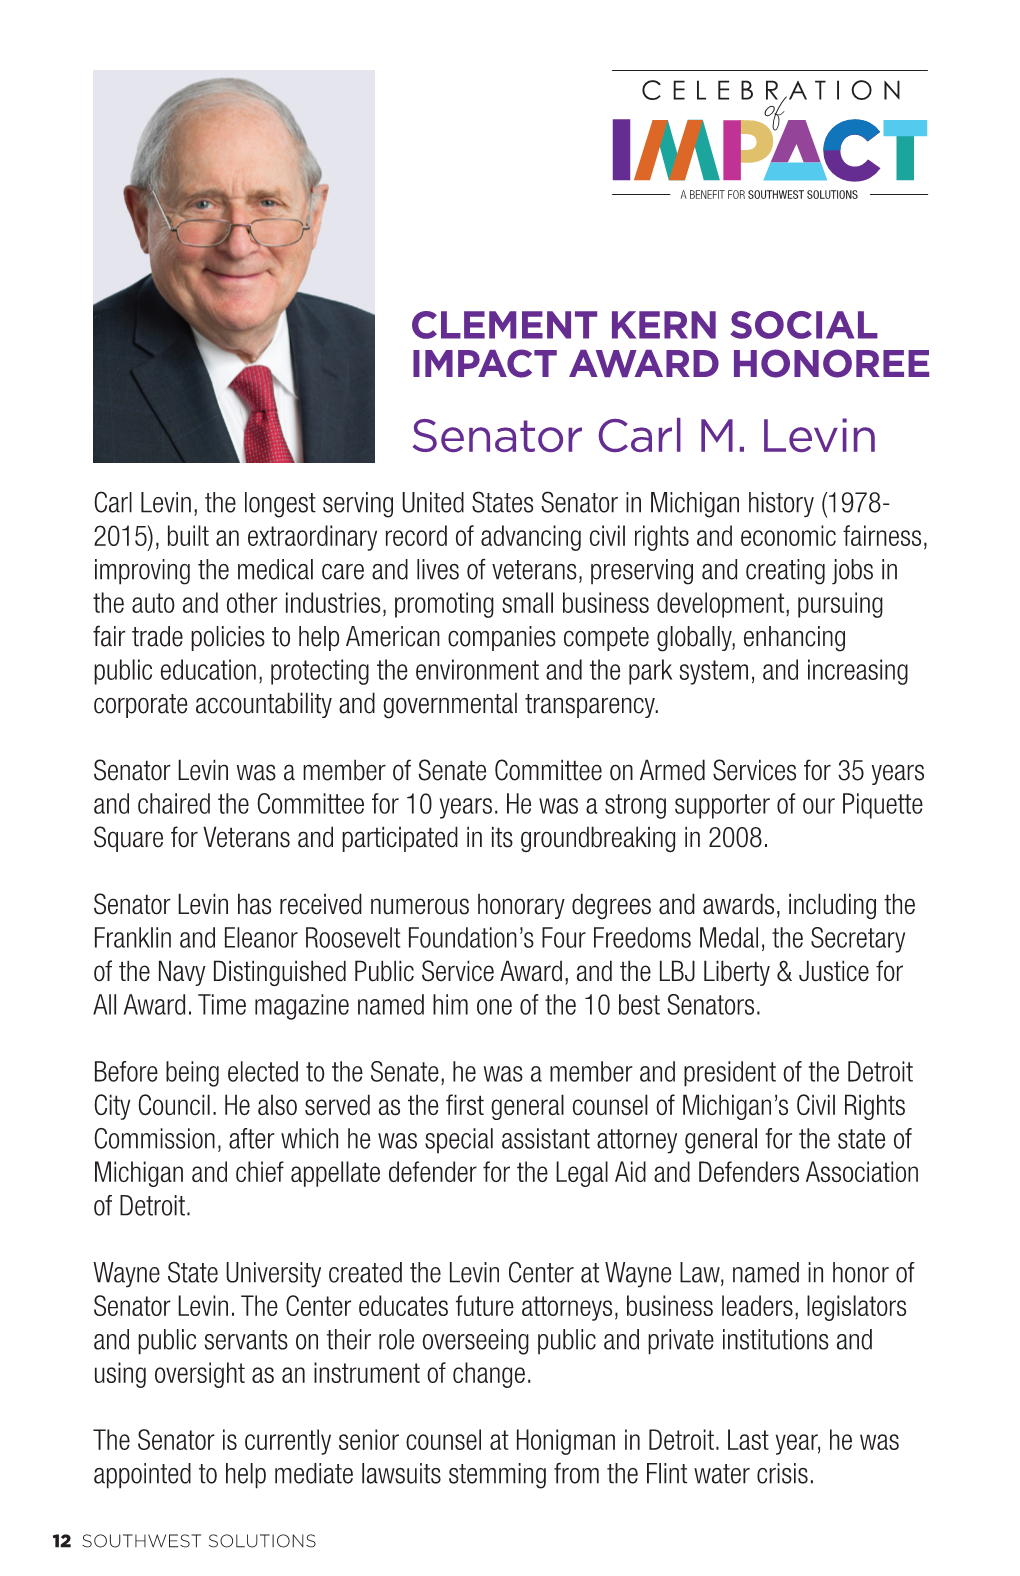 Senator Carl M. Levin